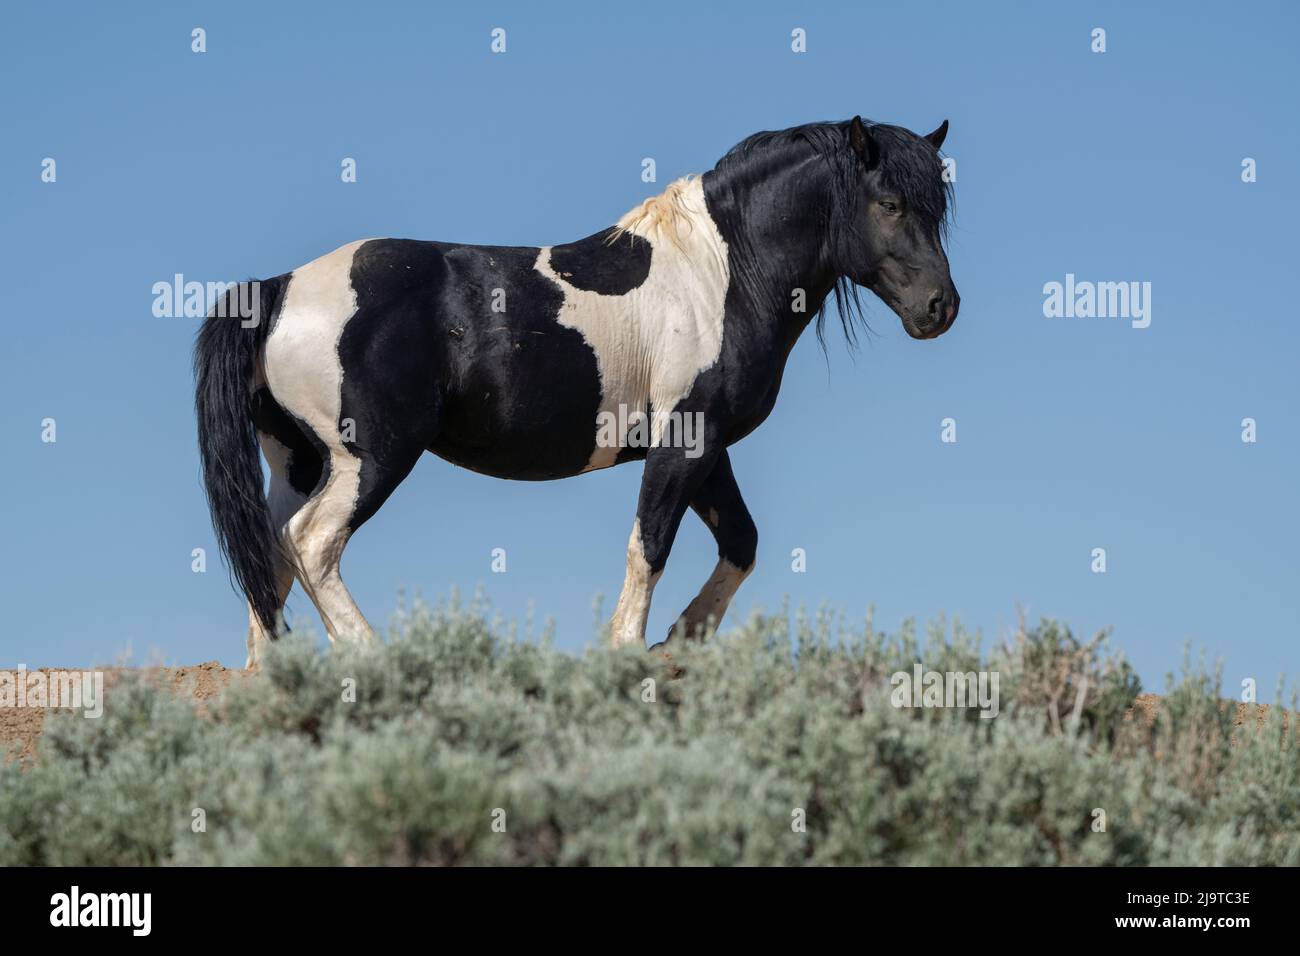 USA, Wyoming. Wild stallion stands in desert sage brush. Stock Photo